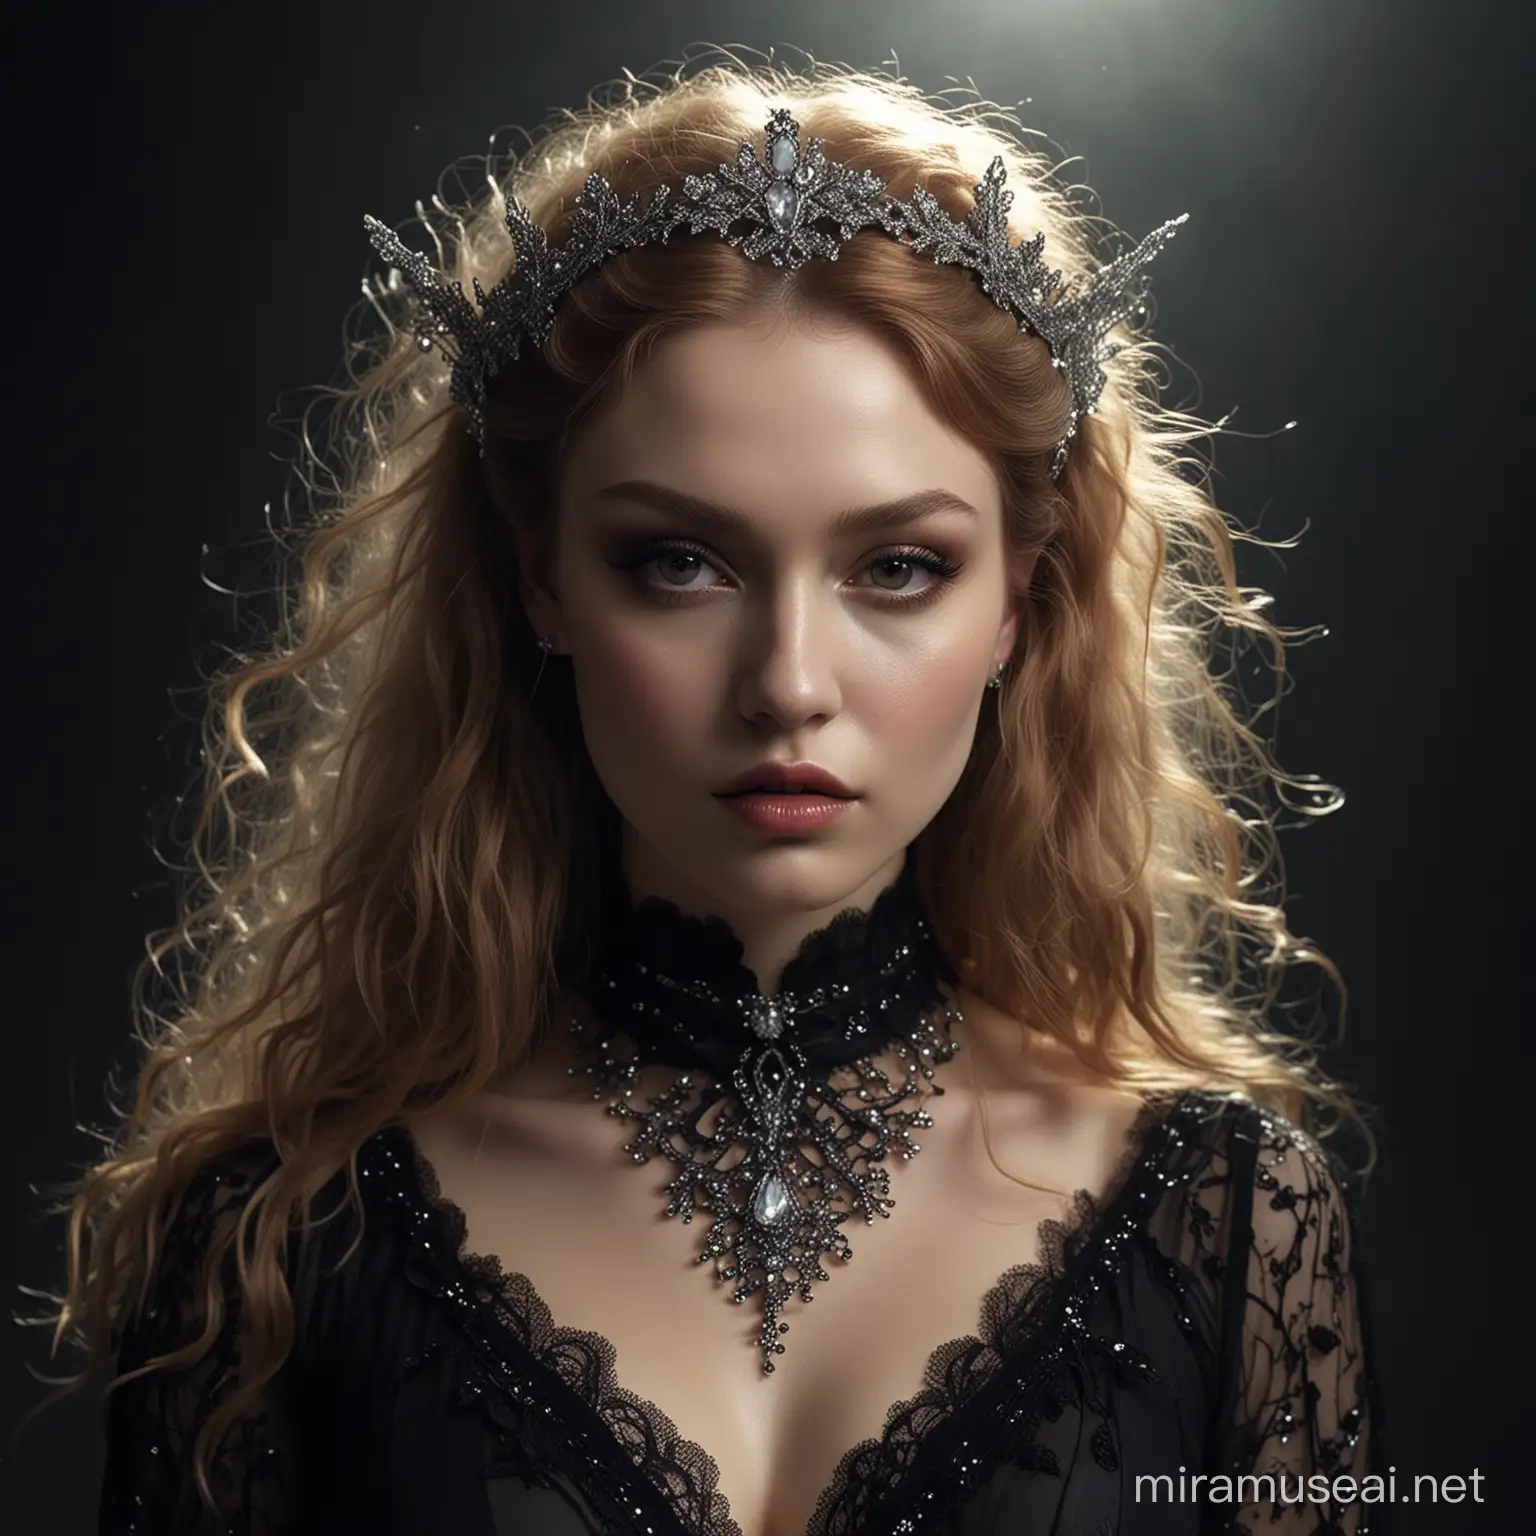 Sensual Vampire Fairy with Dreamy Oak Hair and Diamond Crystals